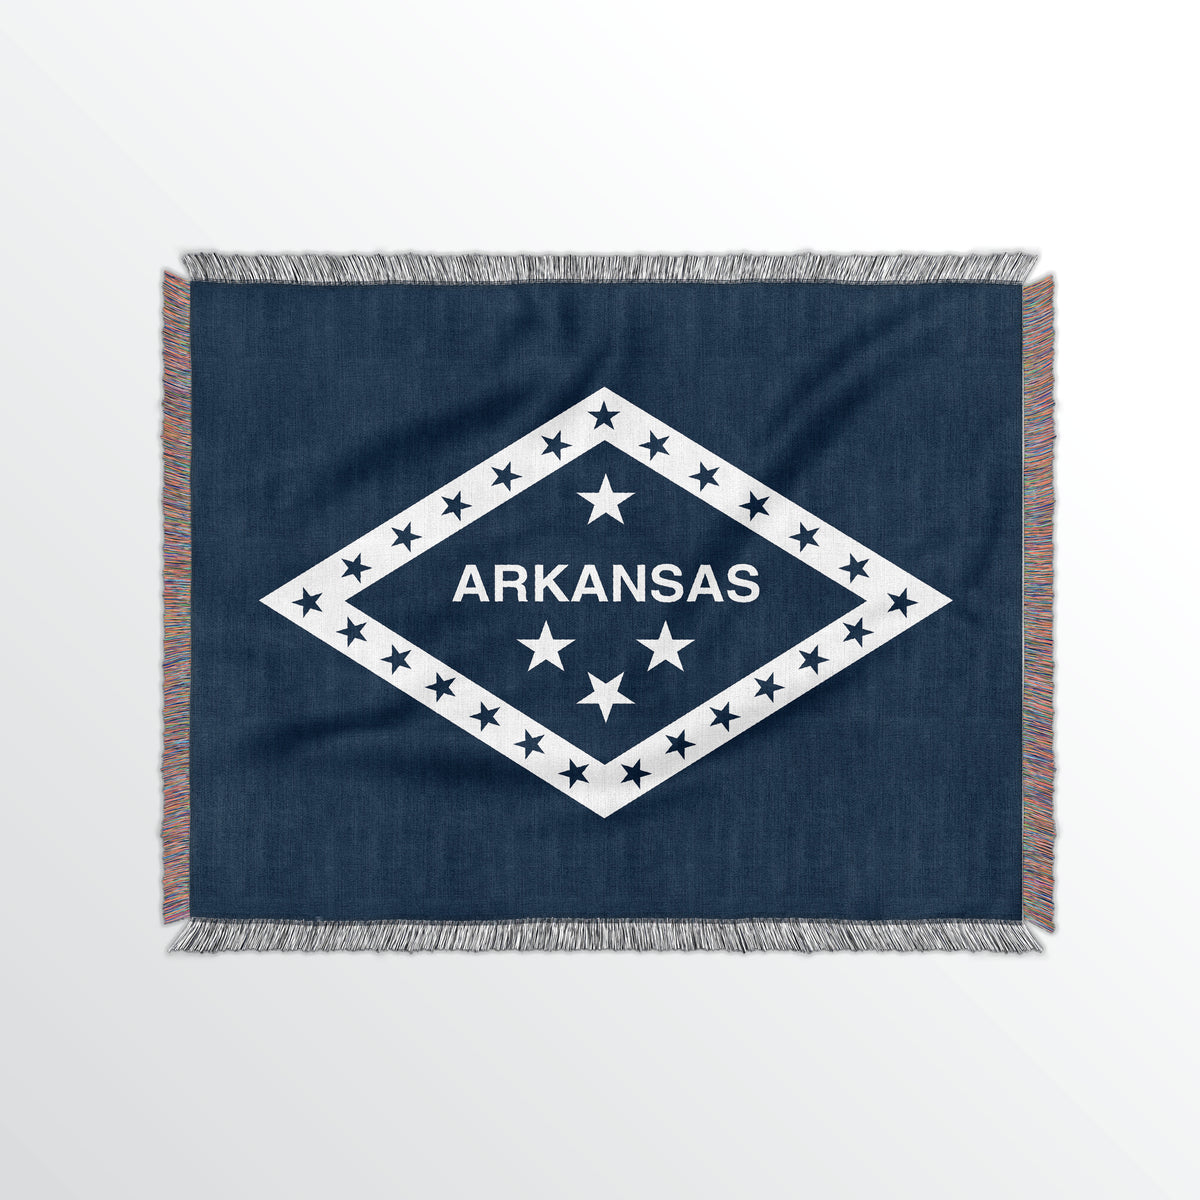 Arkansas State Woven Cotton Blanket - Point Two Design